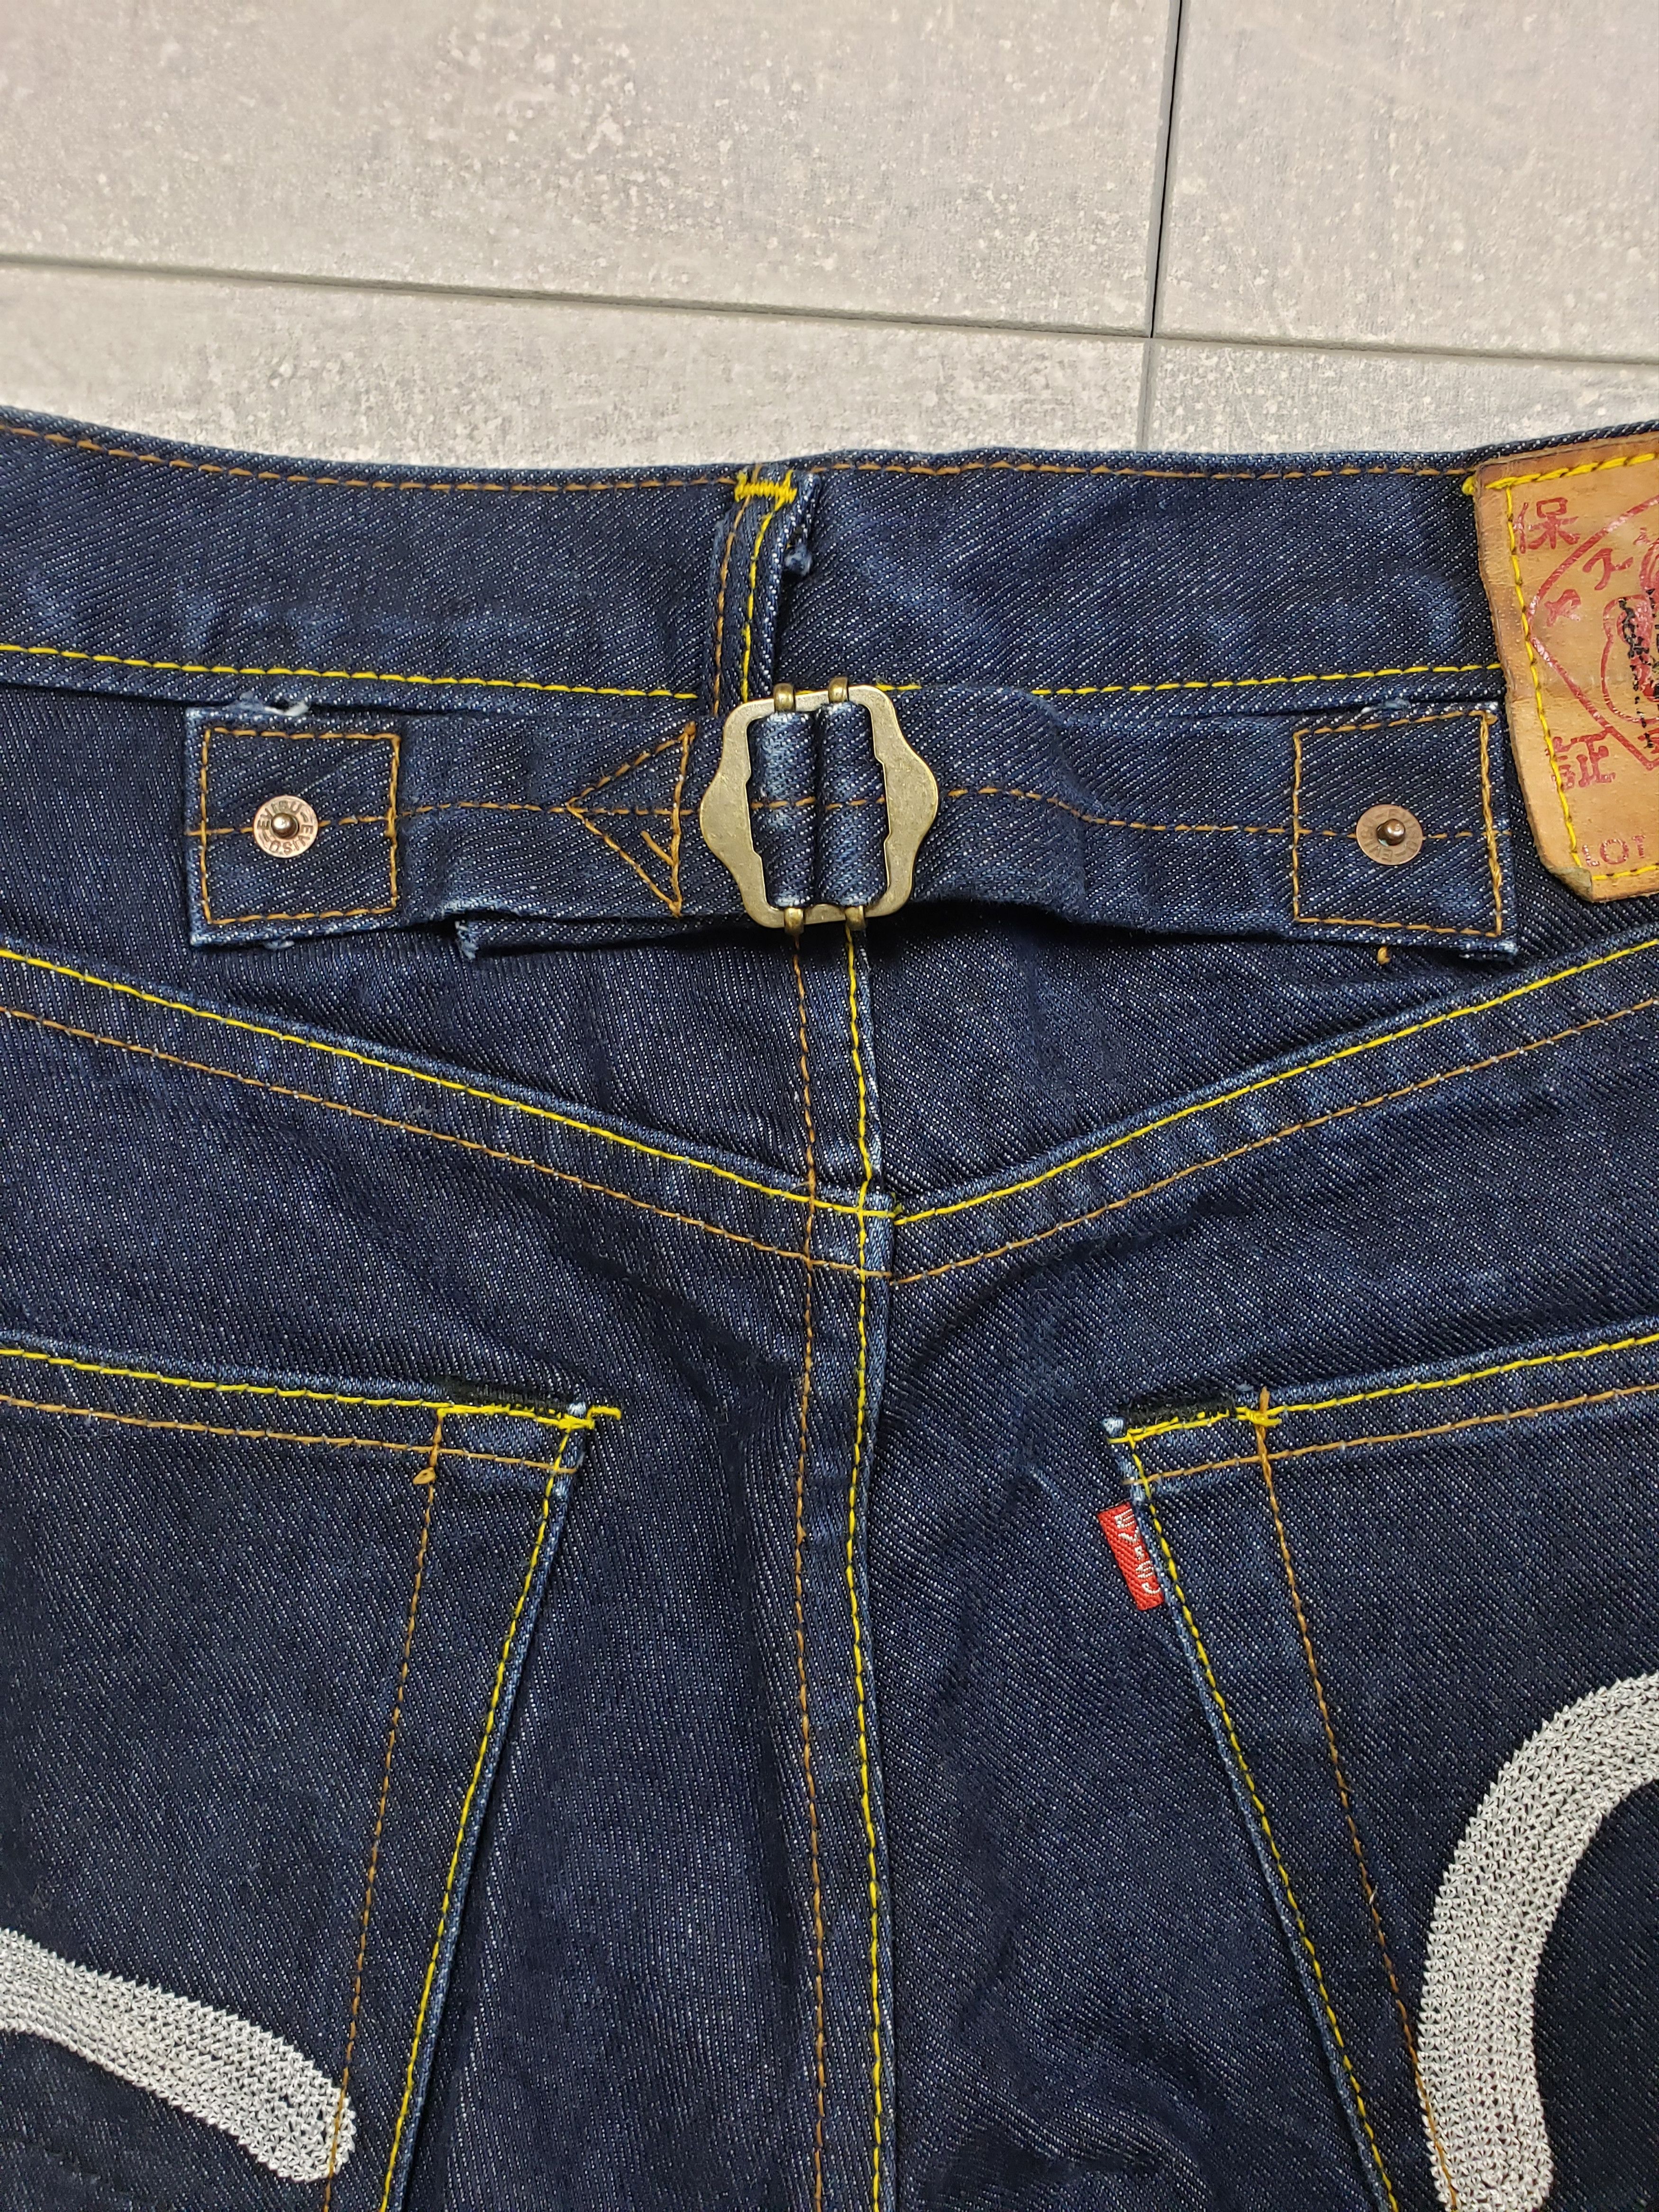 Evisu Evisu denim pants big logo jeans selvedge Size US 34 / EU 50 - 4 Thumbnail